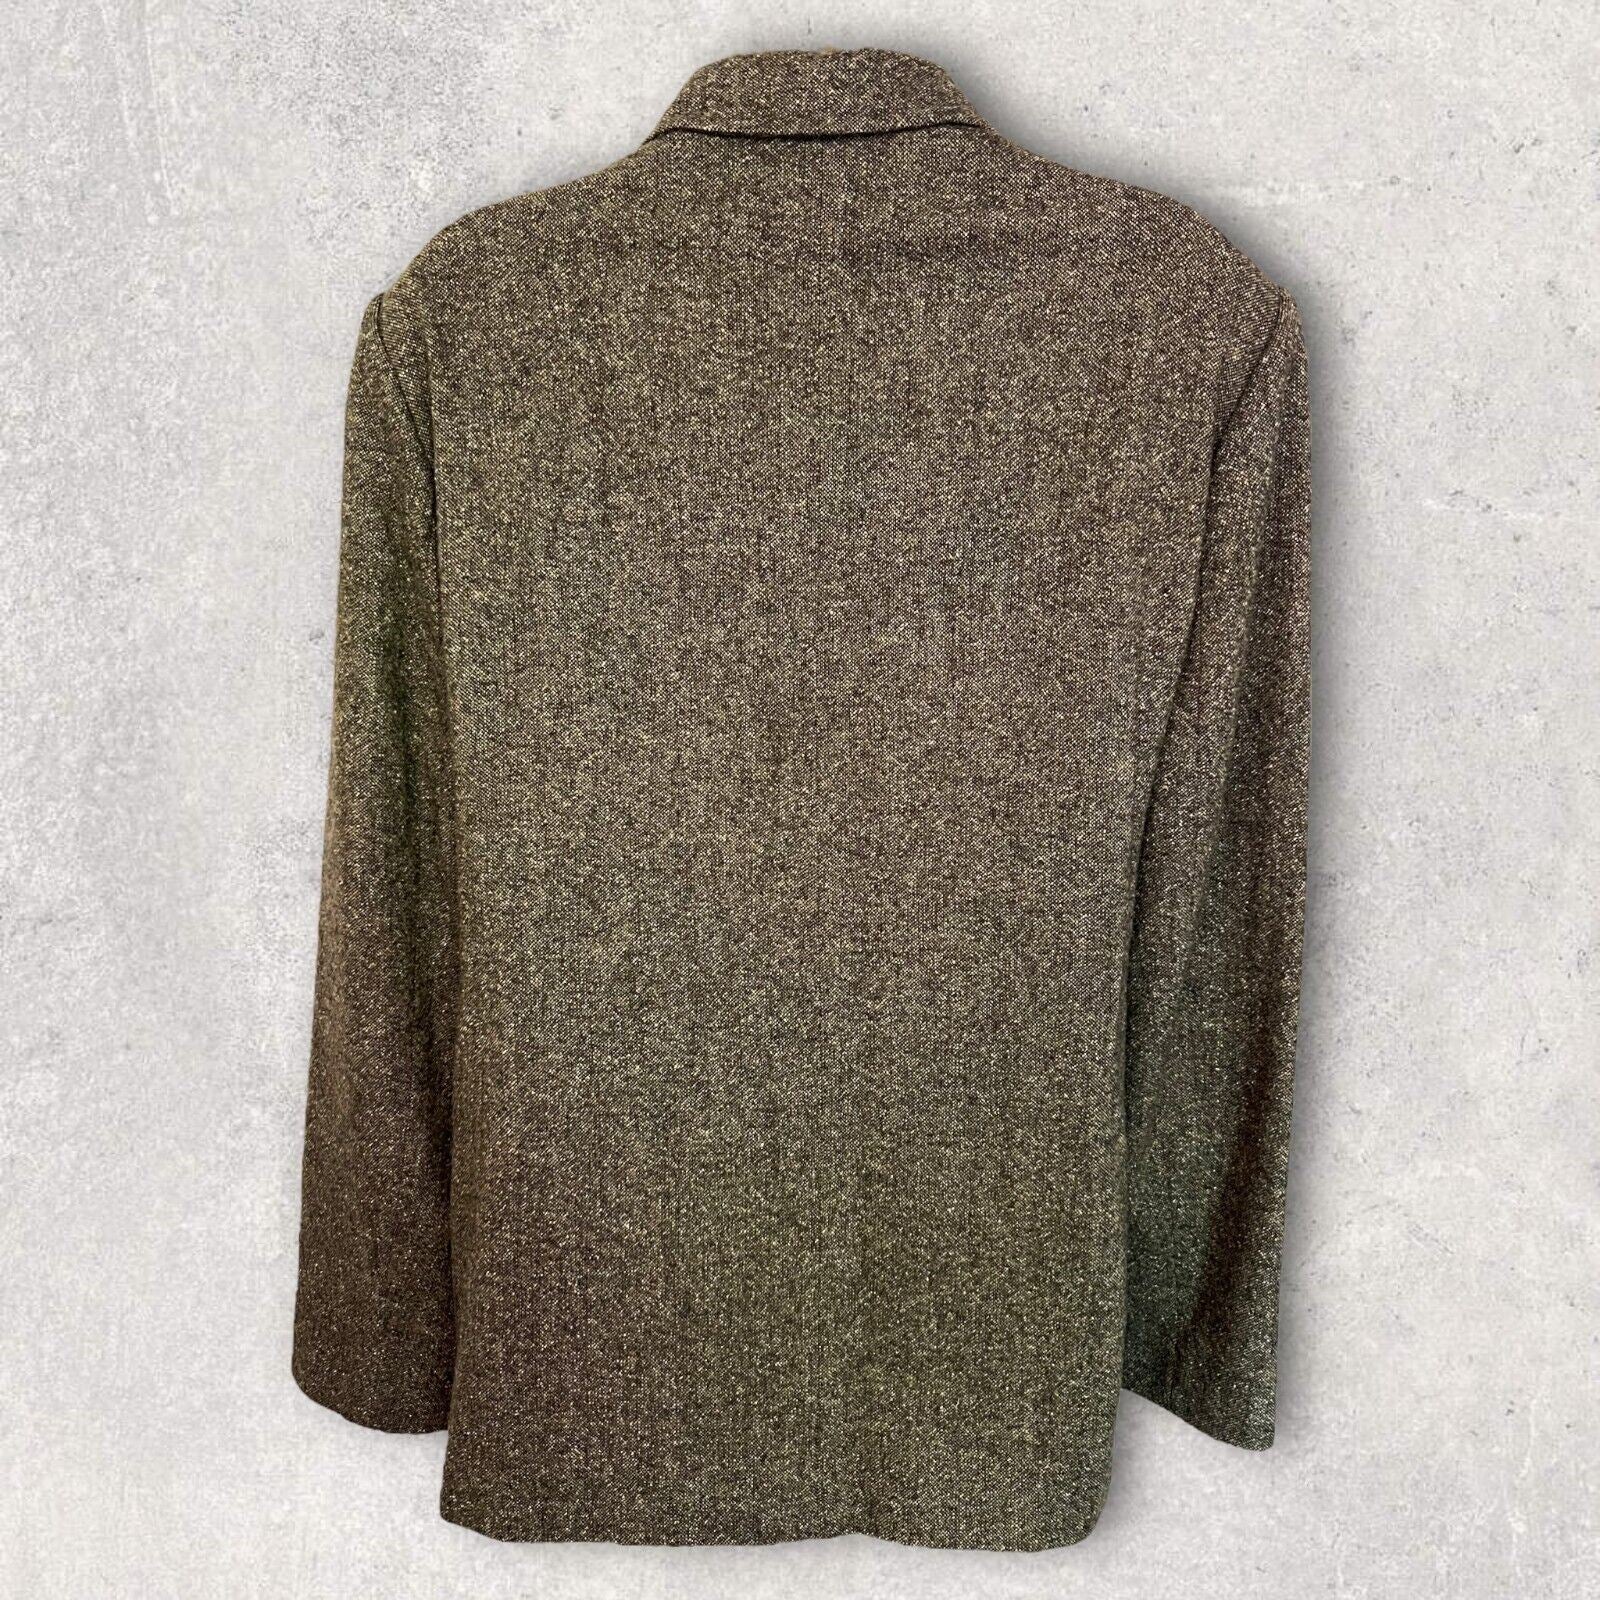 Gregory Pat Grey/Brown Tweed Wool & Silk Blend Box Jacket UK 18 US 14 EU 46 Timeless Fashions